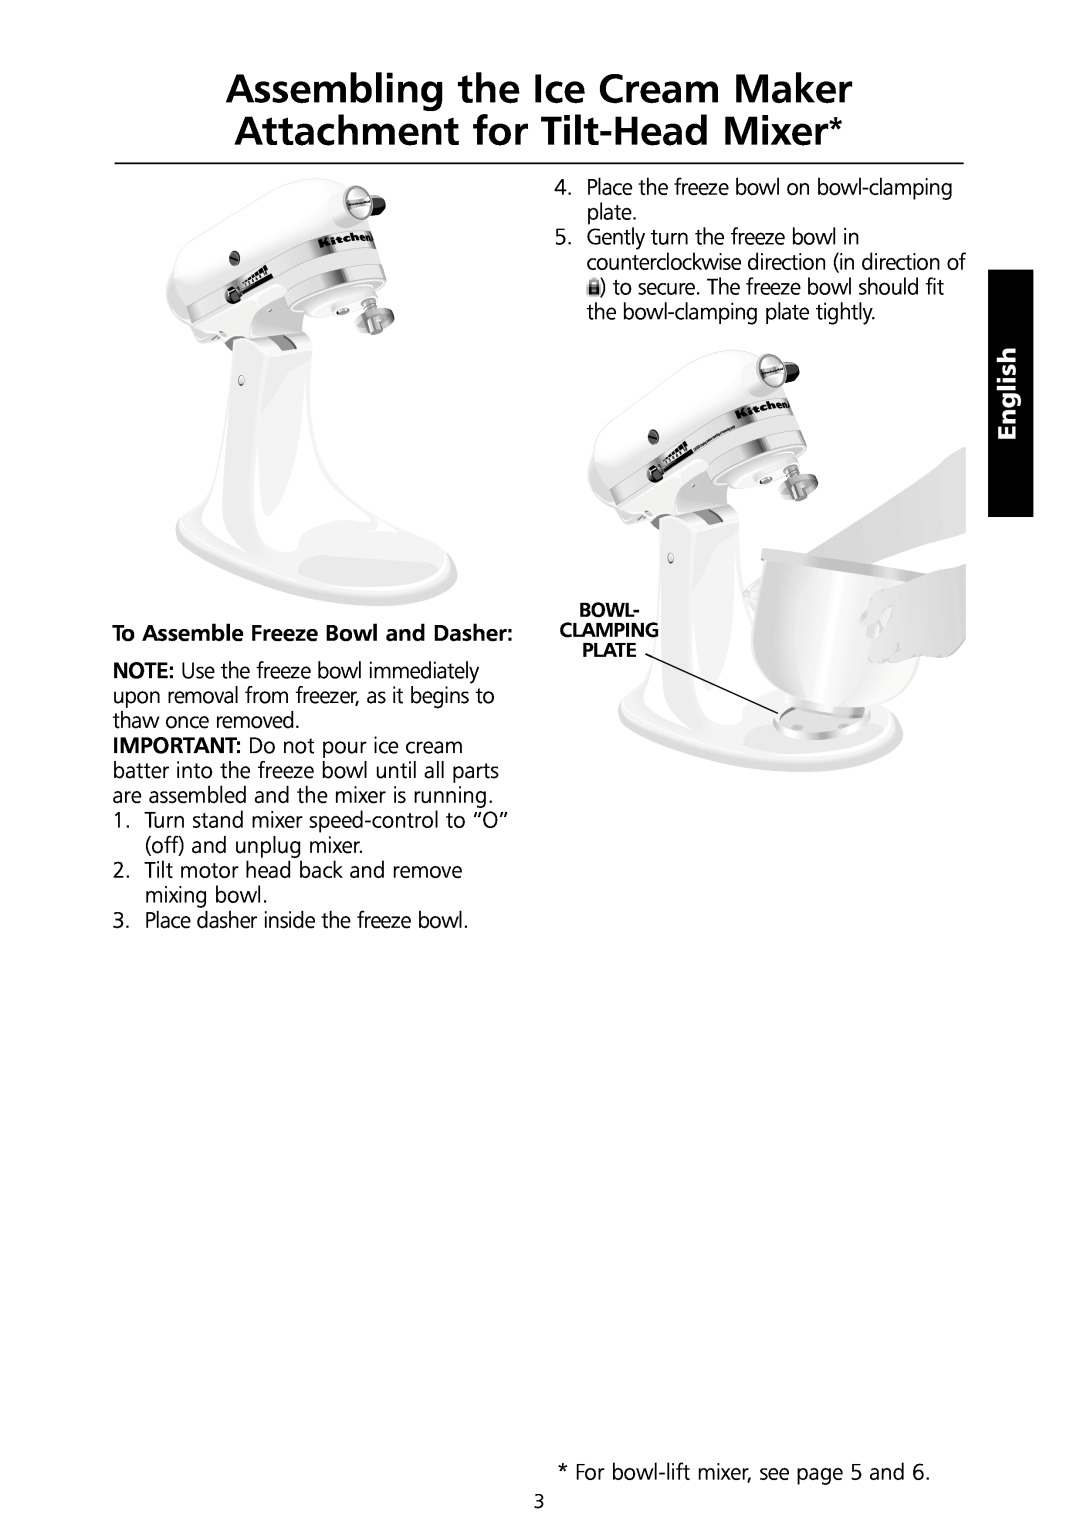 KitchenAid 5KICA0WH manual Assembling the Ice Cream Maker Attachment for Tilt-Head Mixer, English 